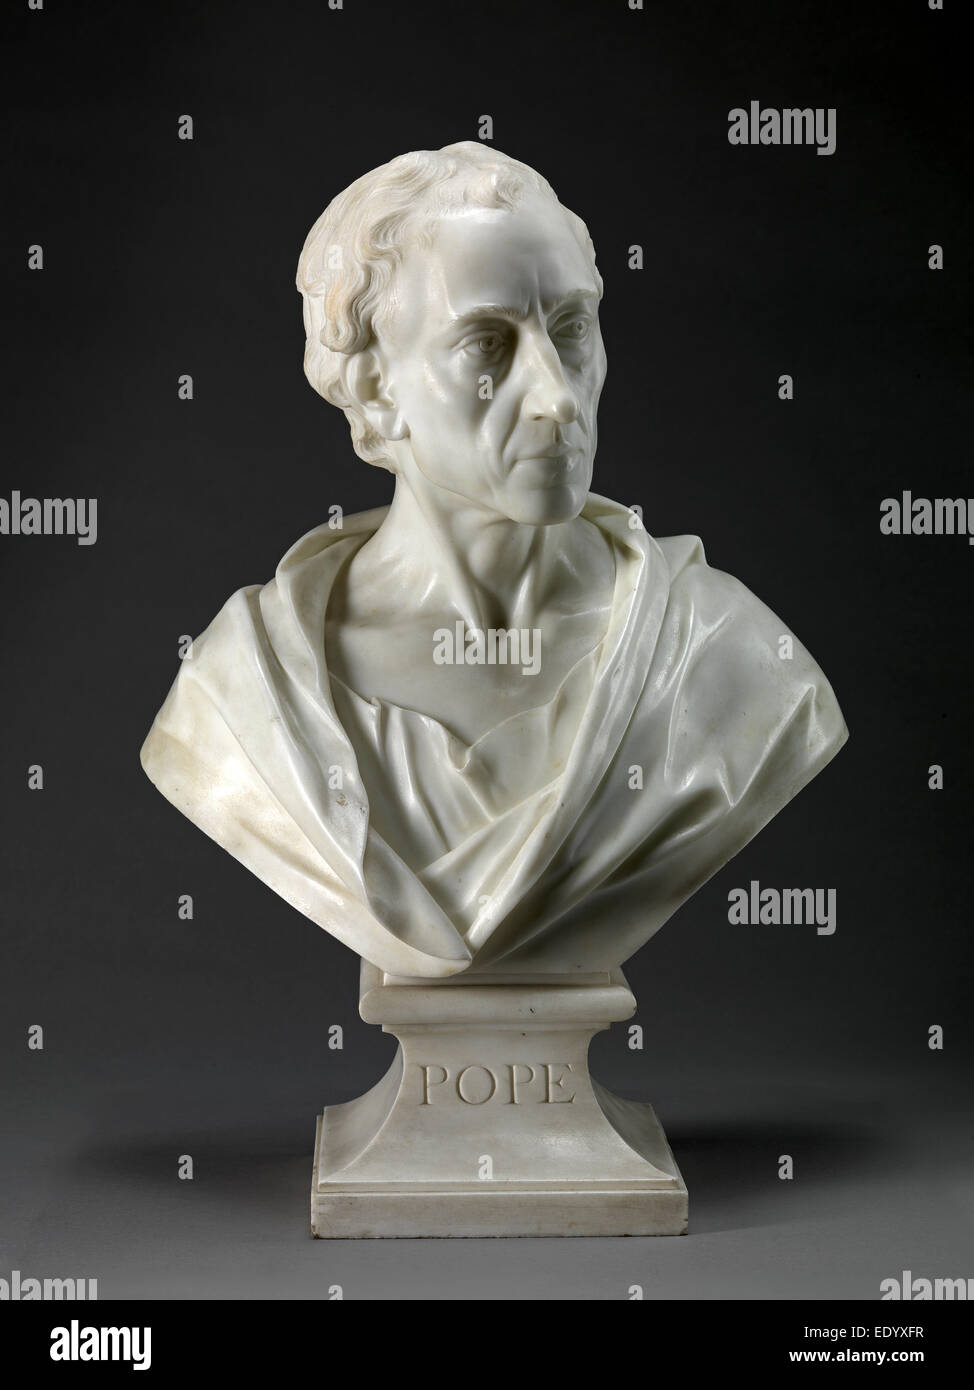 Alexander Pope Inscribed, chiseled on front of socle: 'POPE'; on proper left under sitter's shoulder: 'ALEX. POPE. Nats. Stock Photo